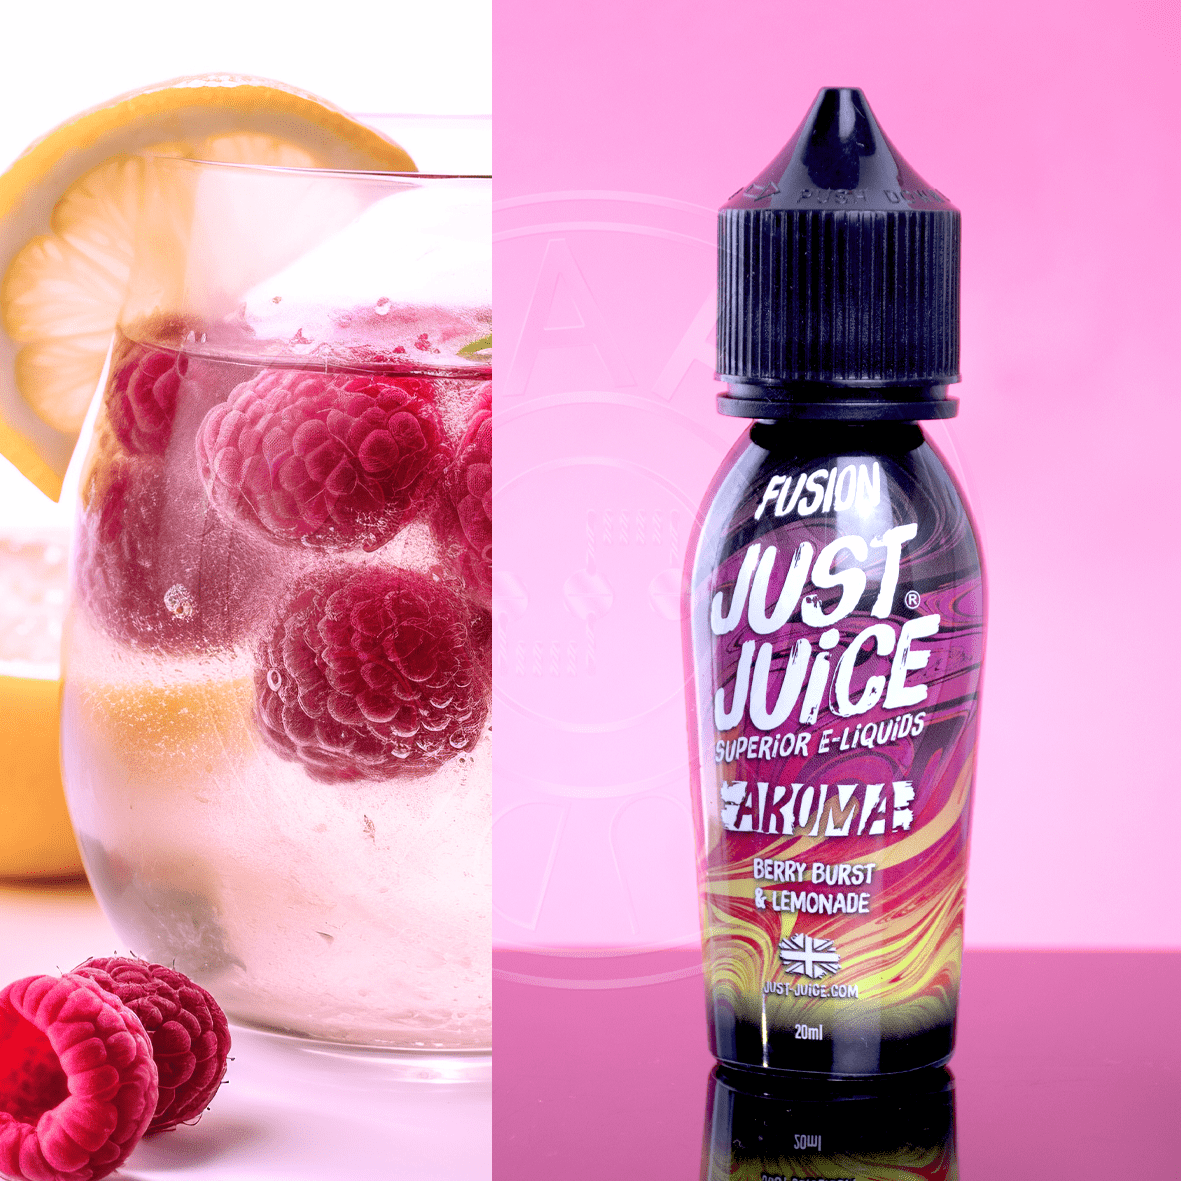 Kiwi and Cranberry on Ice - Just Juice - Liquido Scomposto Shot - Svapo  Studio